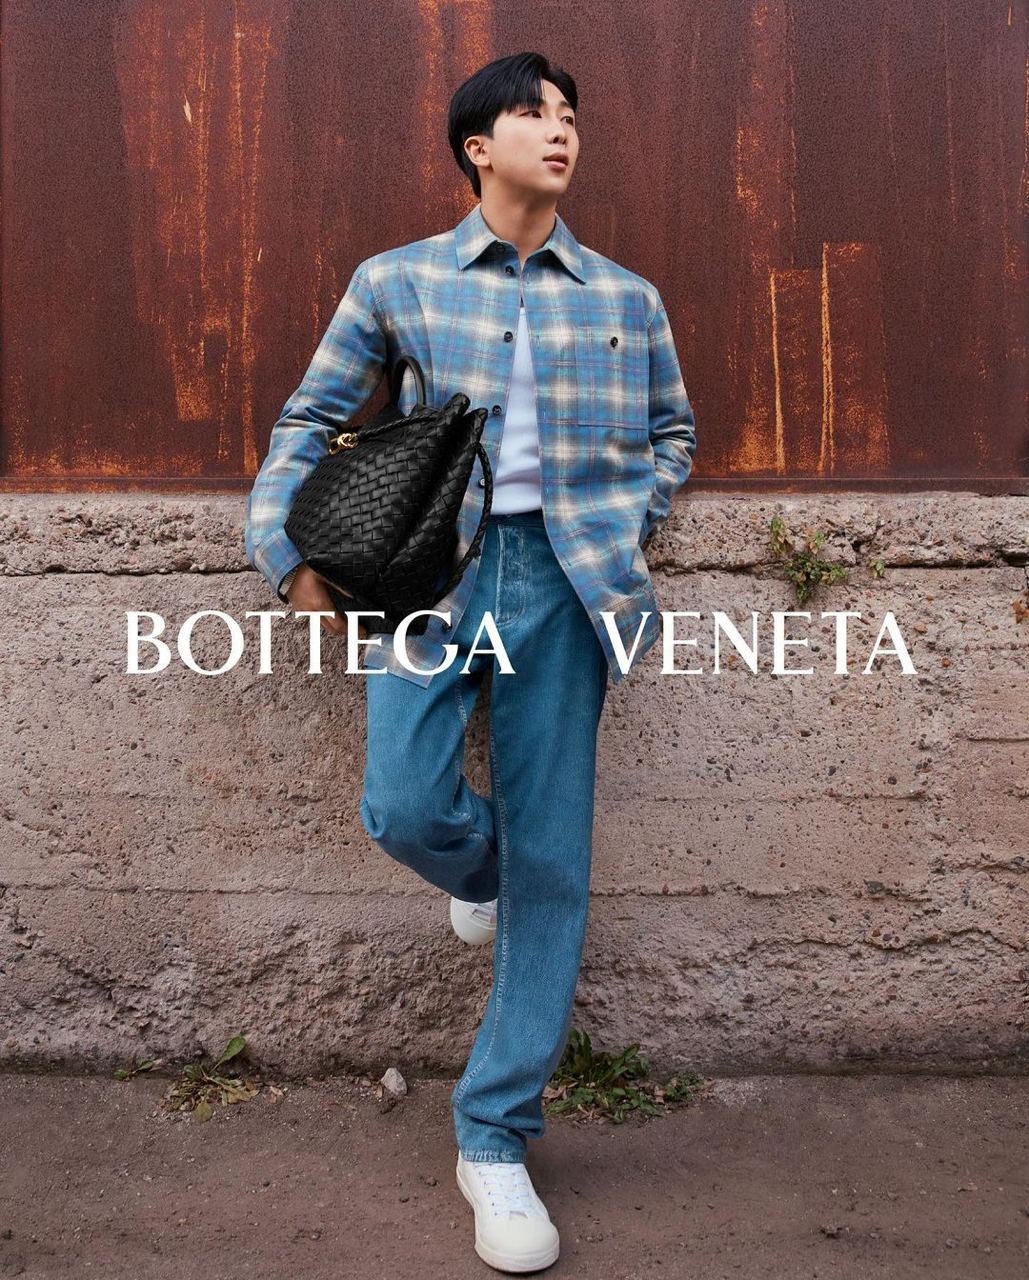 RM из BTS стал амбассадором Bottega Veneta (фото 1)